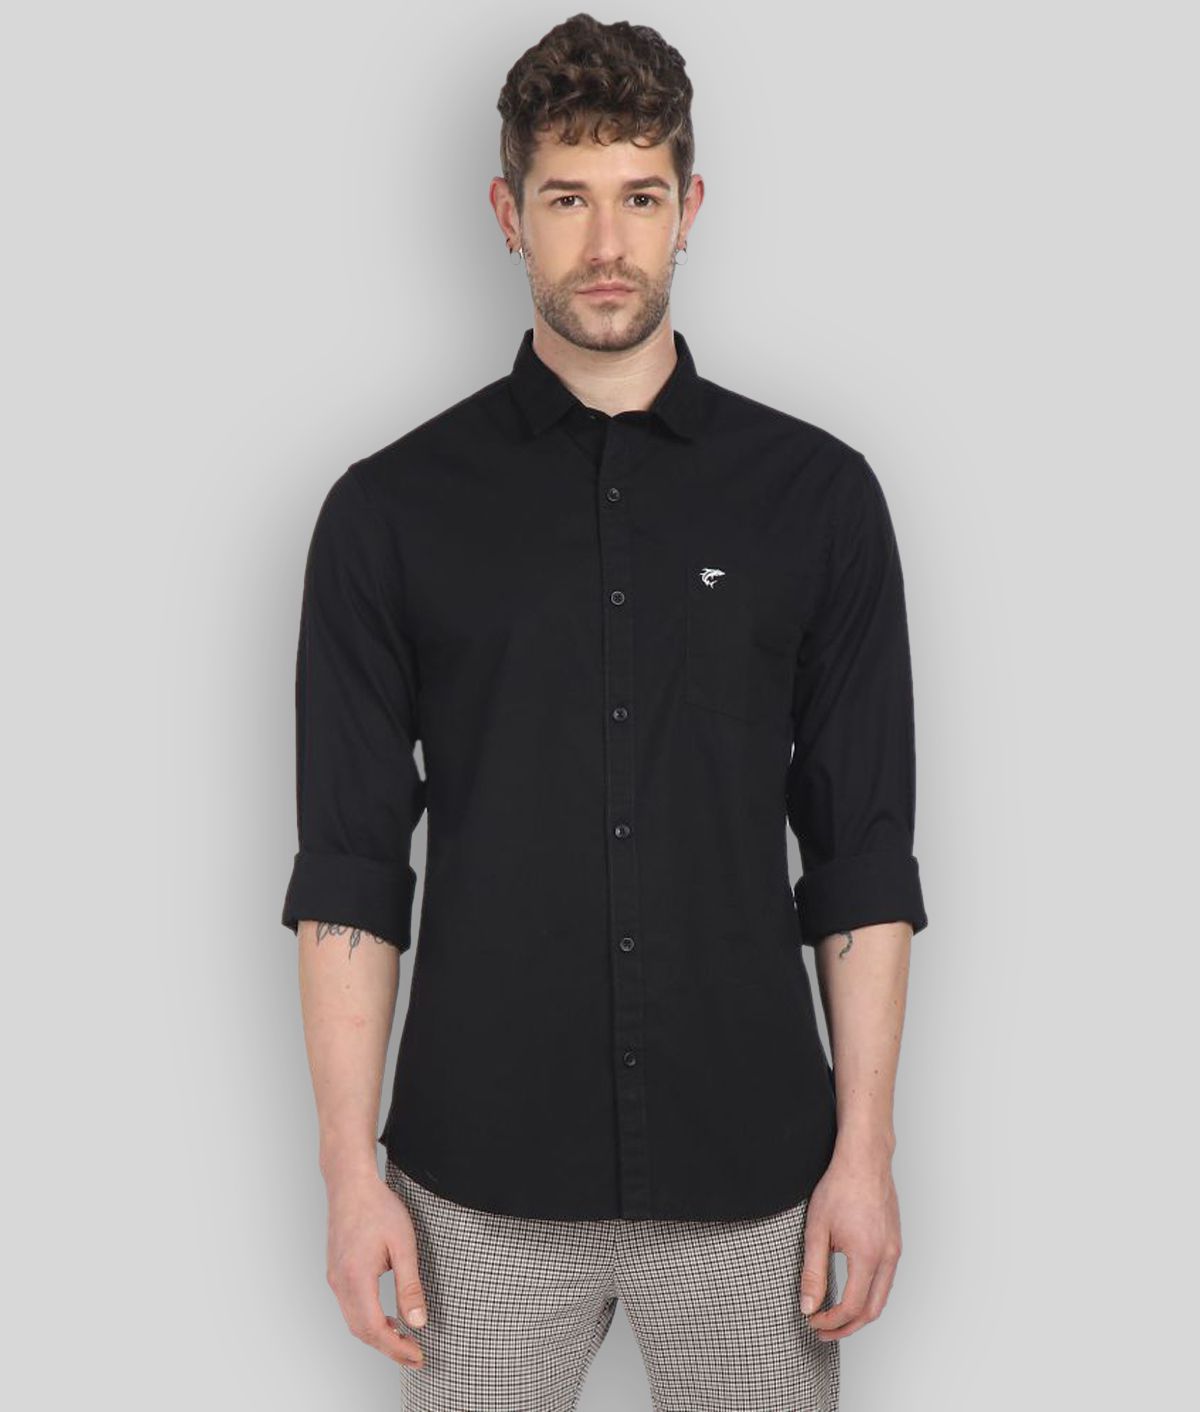 Ruggers - Black Cotton Blend Regular Fit Men's Casual Shirt ( Pack of 1 )